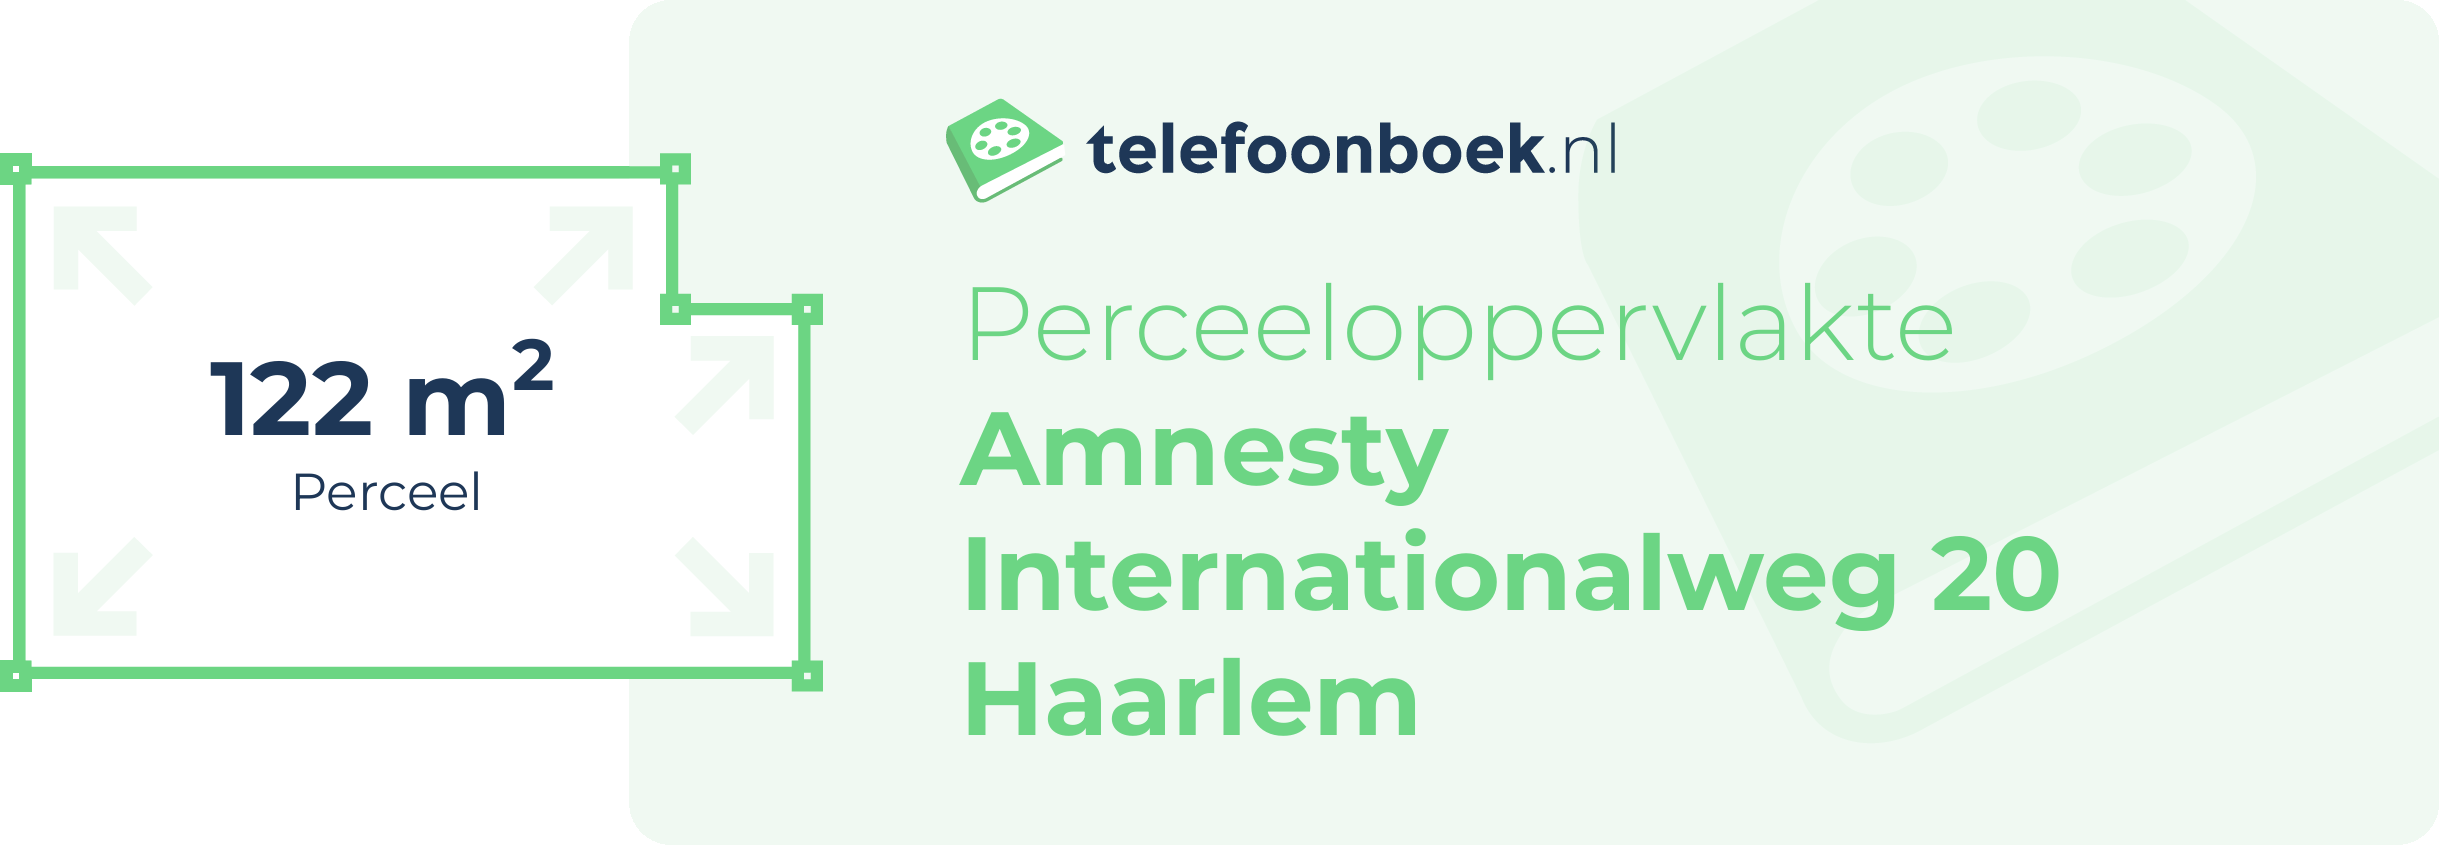 Perceeloppervlakte Amnesty Internationalweg 20 Haarlem